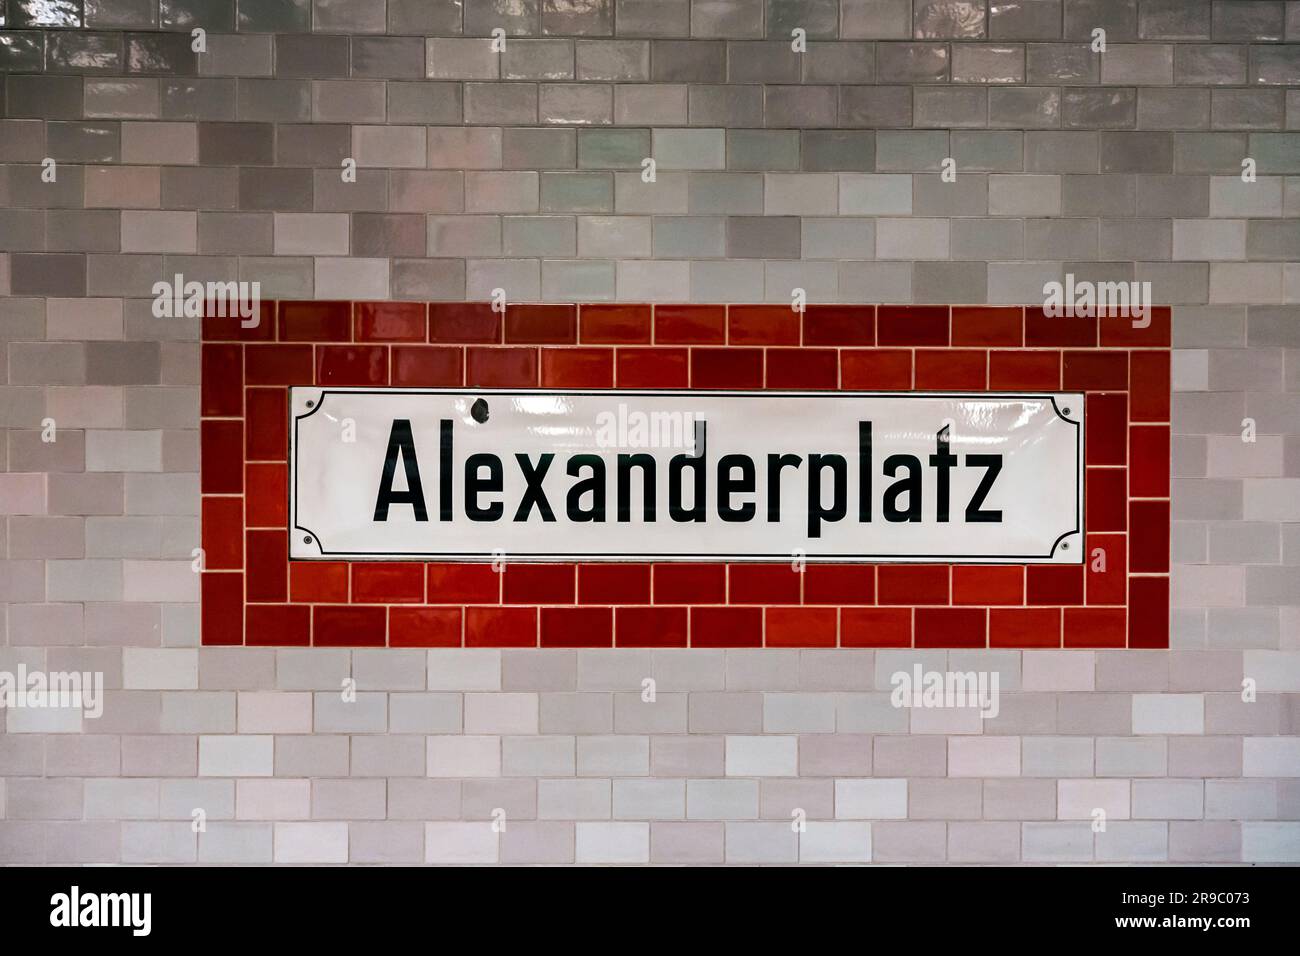 Alexanderplatz sign at Alexanderplatz metro station in Berlin, Germany ...